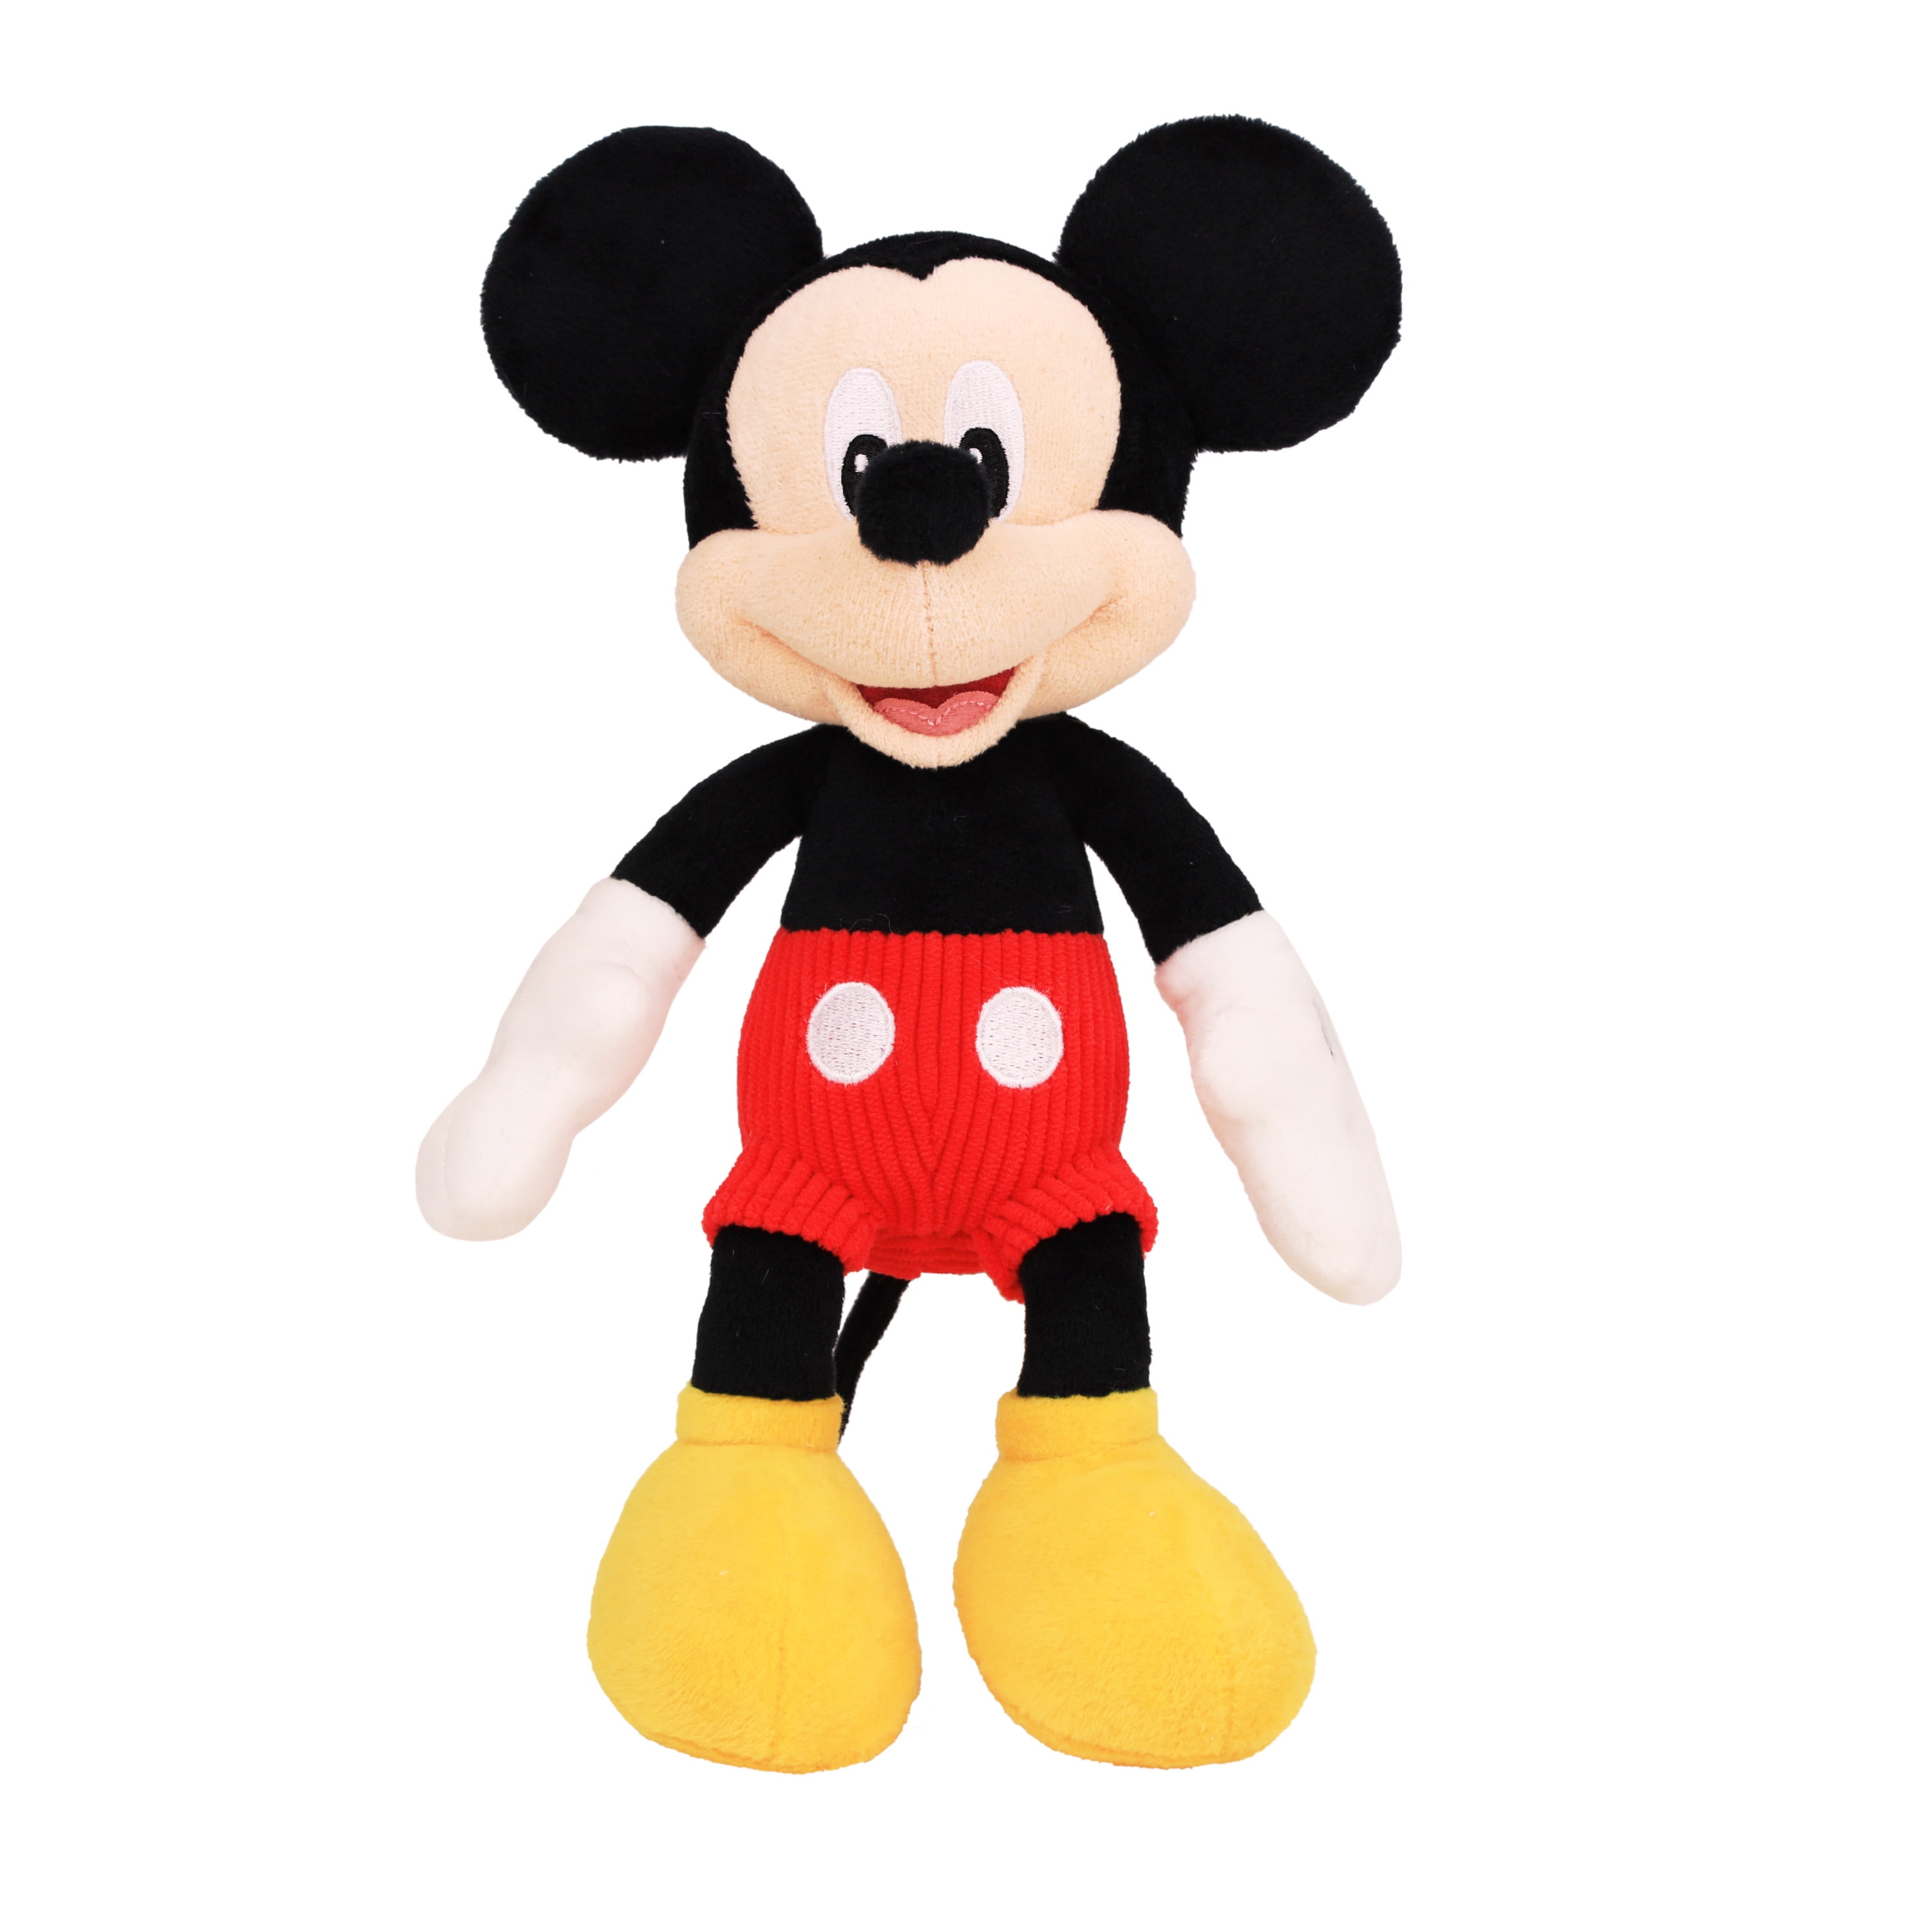 17" Classic Mickey Mouse Plush Toy Stuffed Animal Doll Disney Store Minnie Guy 